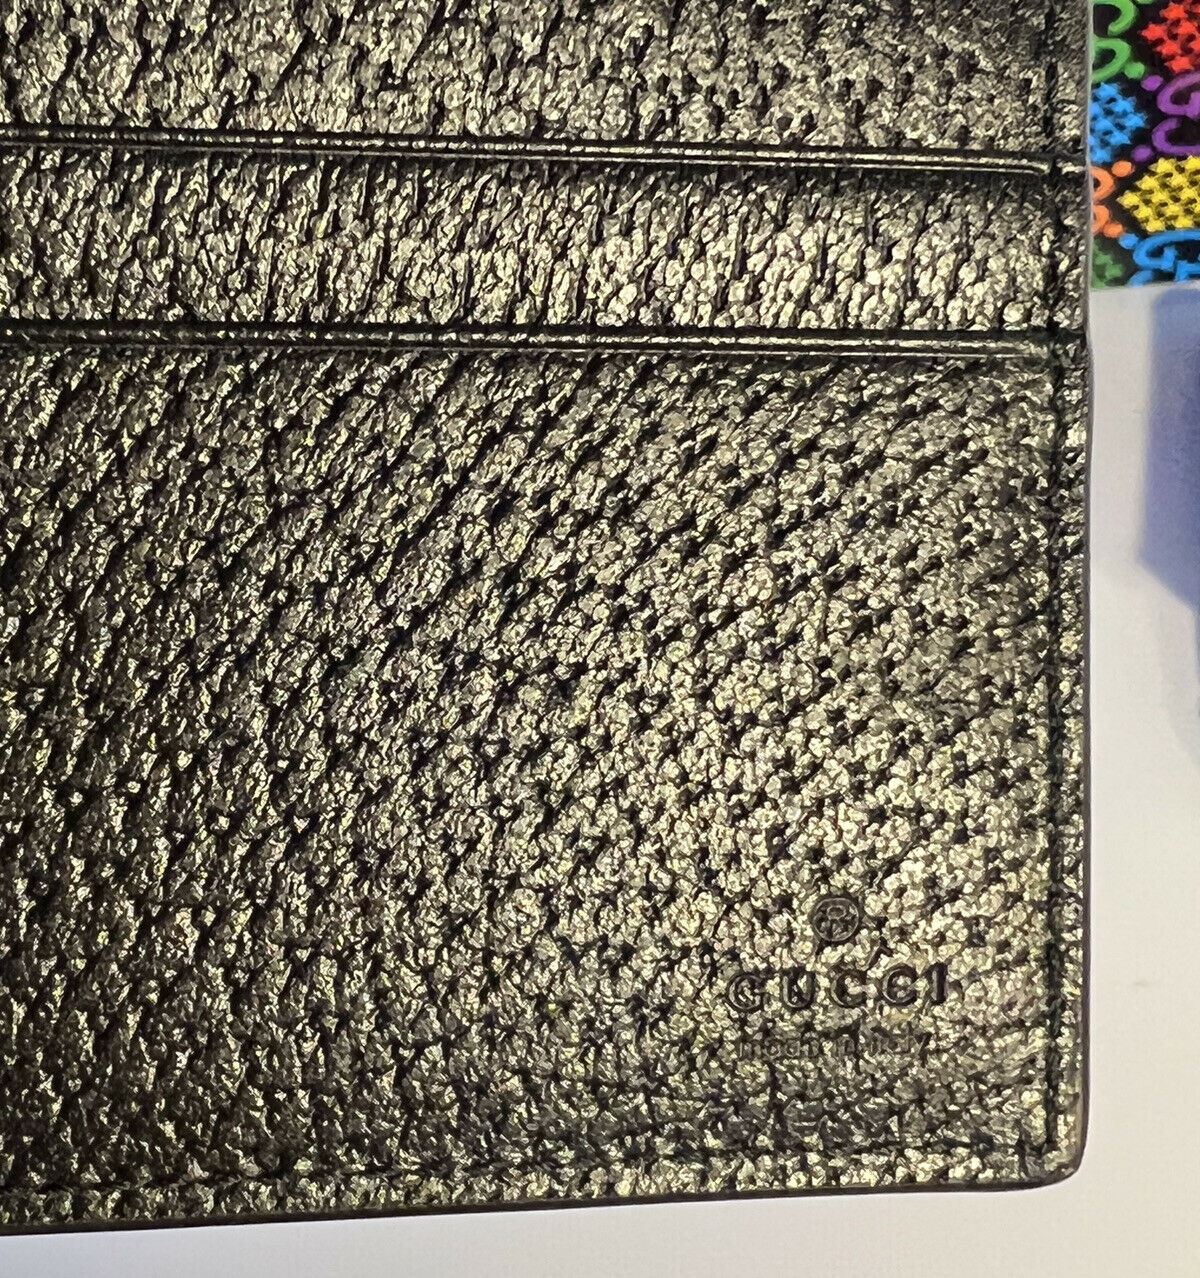 Neu mit Etikett: Gucci GG Psychedelic Bifold Wallet Made in Italy 601089 